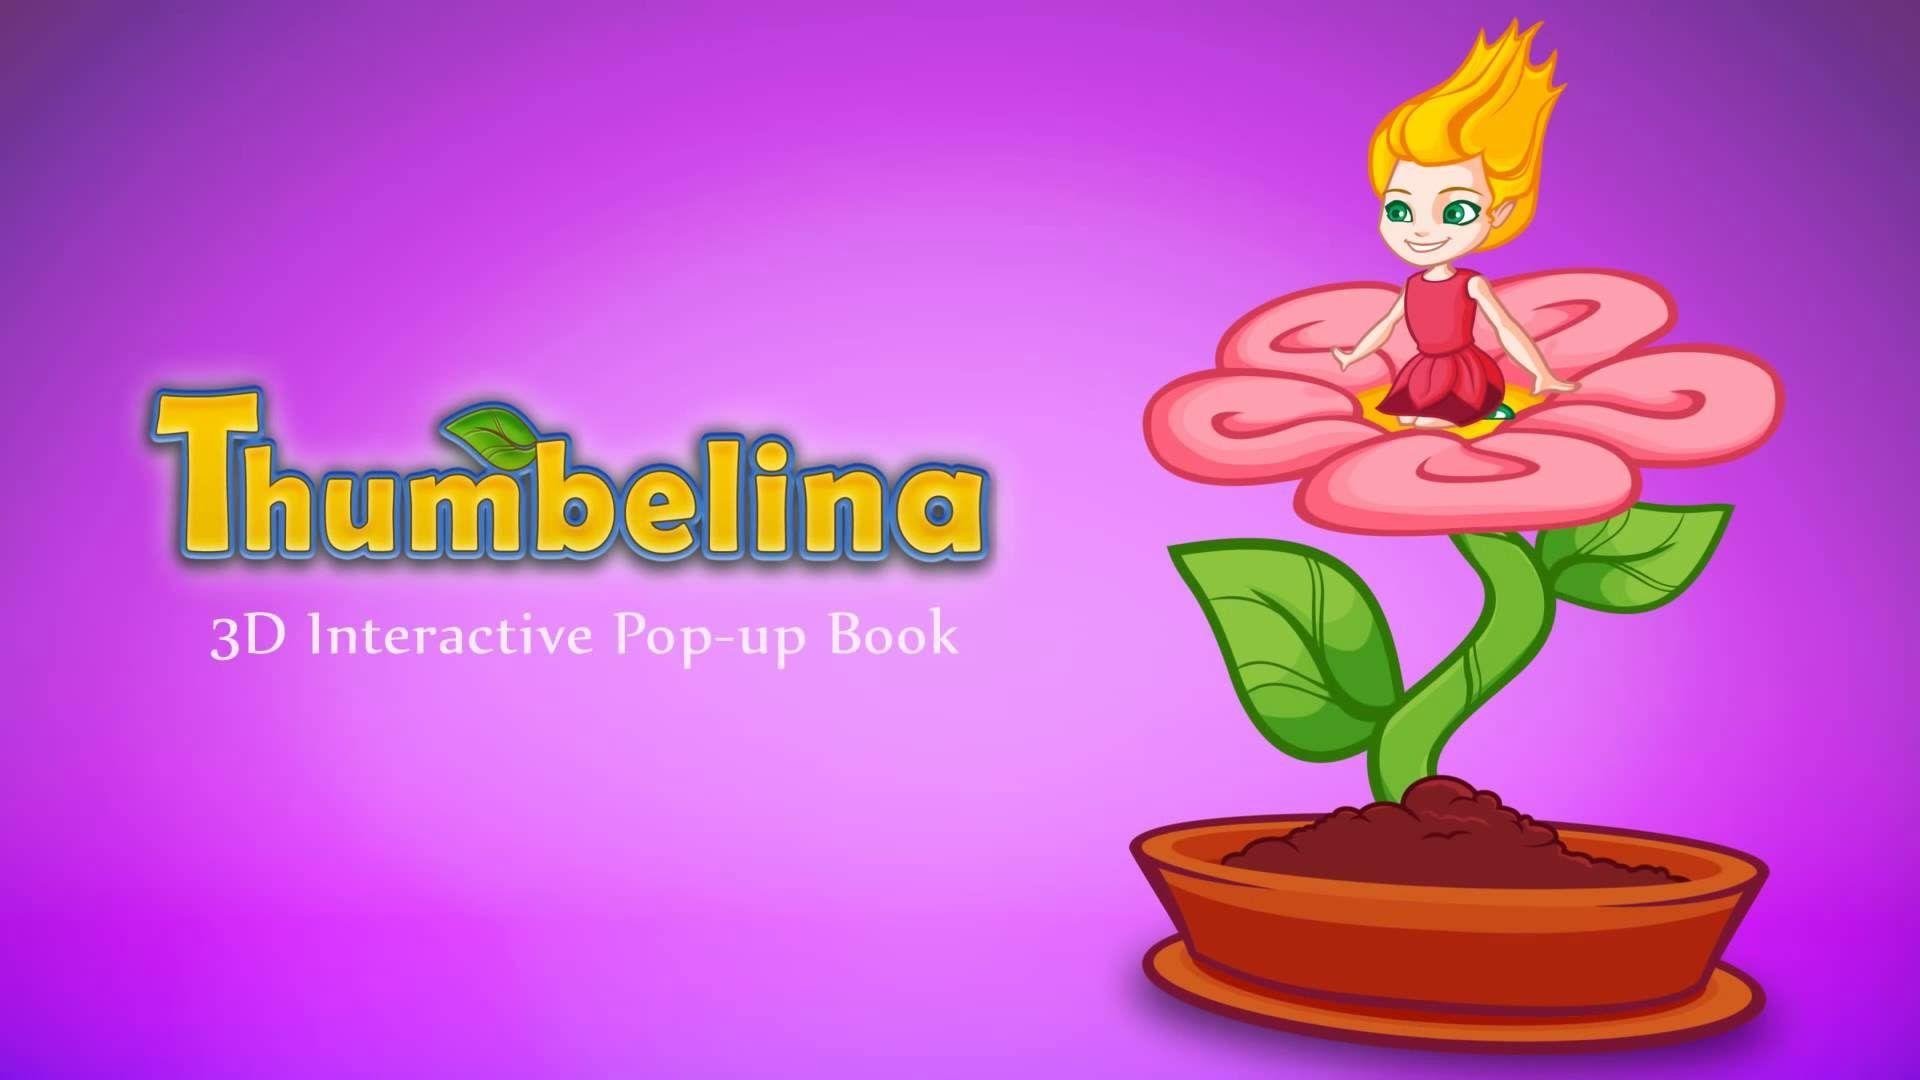 Thumbelina 3D Interactive Pop Up Book